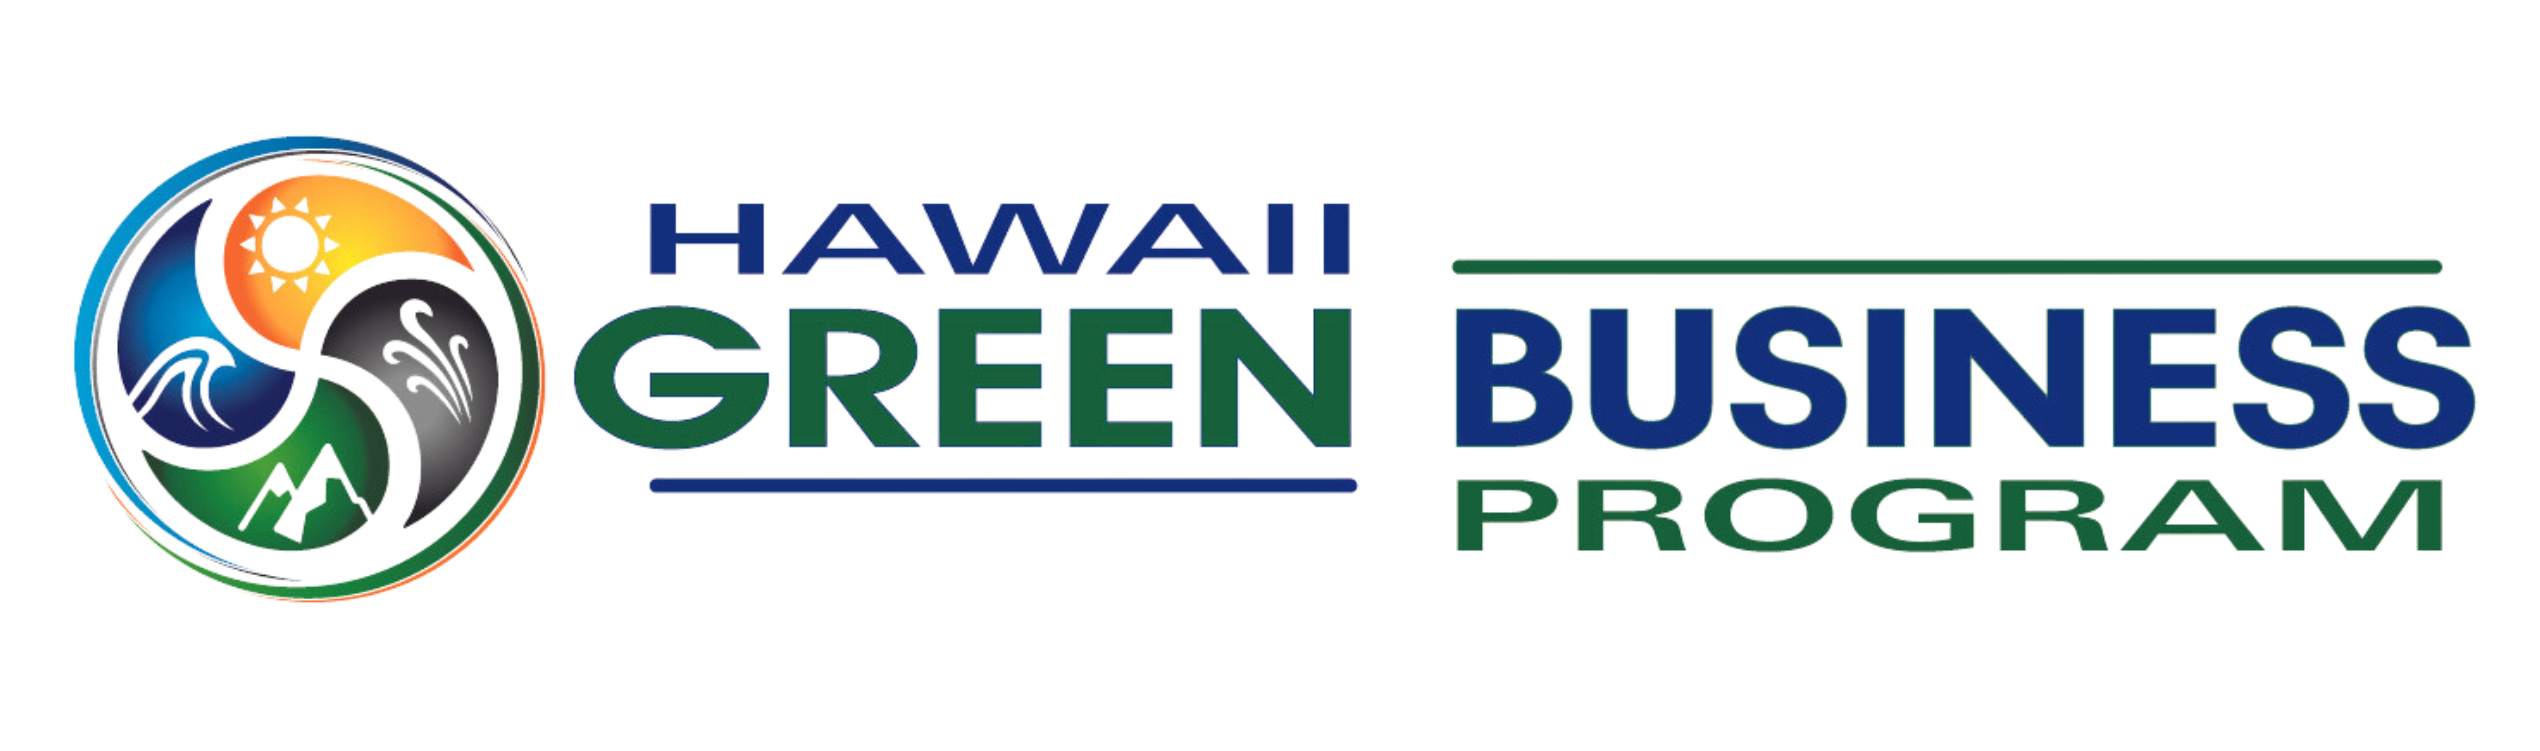 Hawaii Green Business Program logo